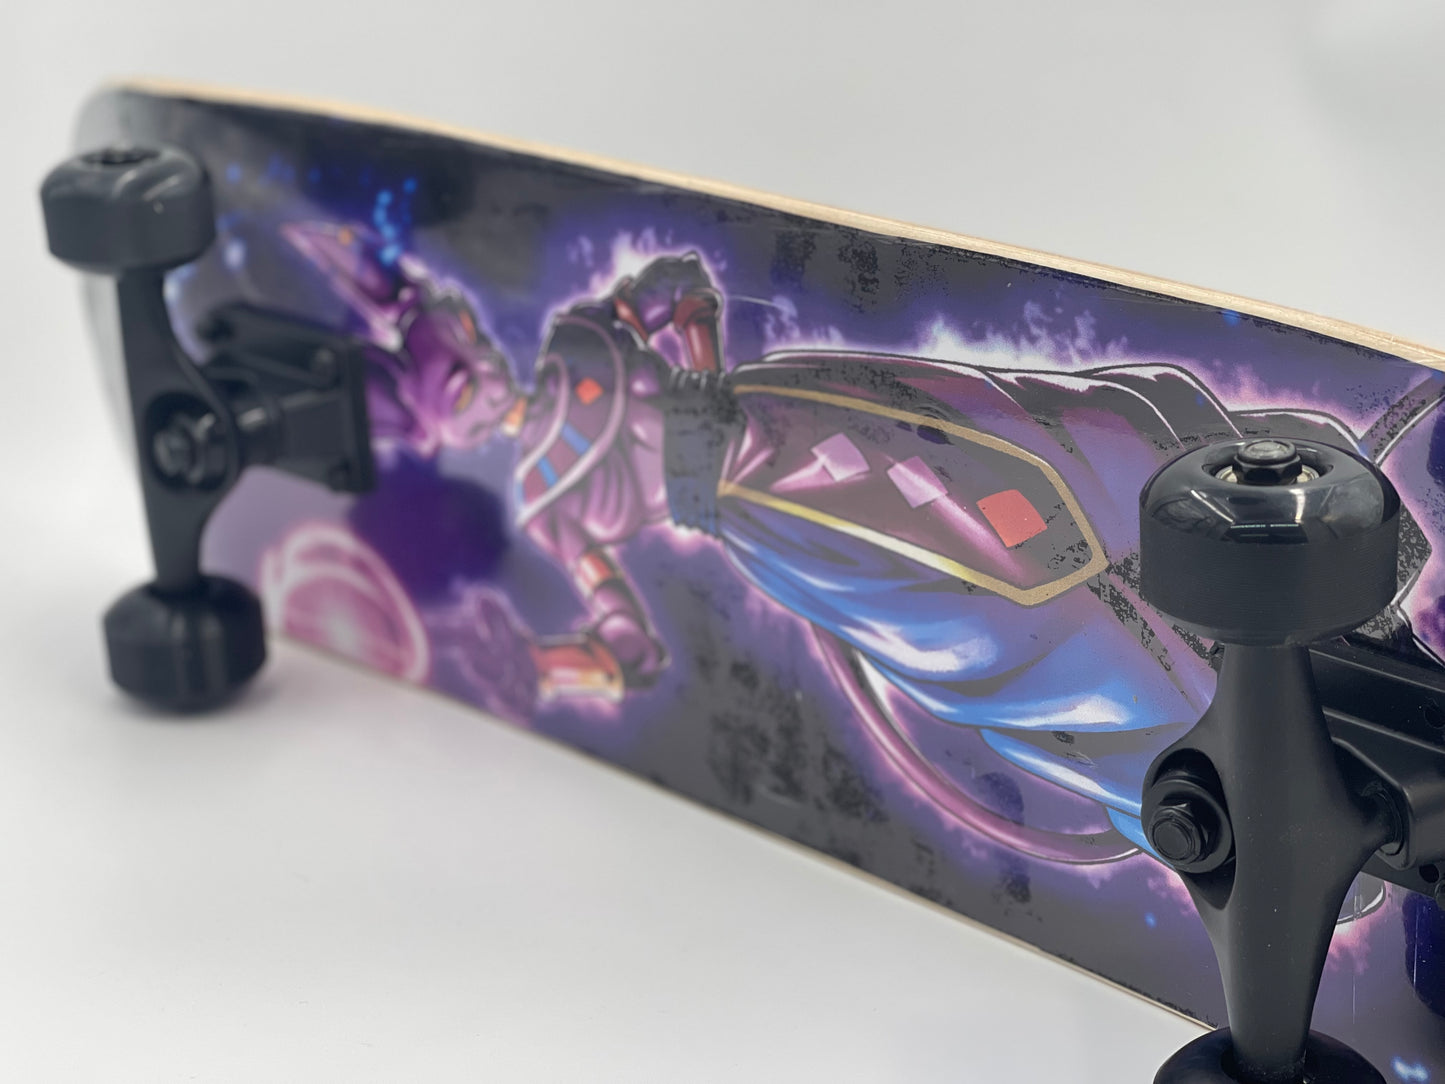 Dragon Ball Z Beerus Skateboard